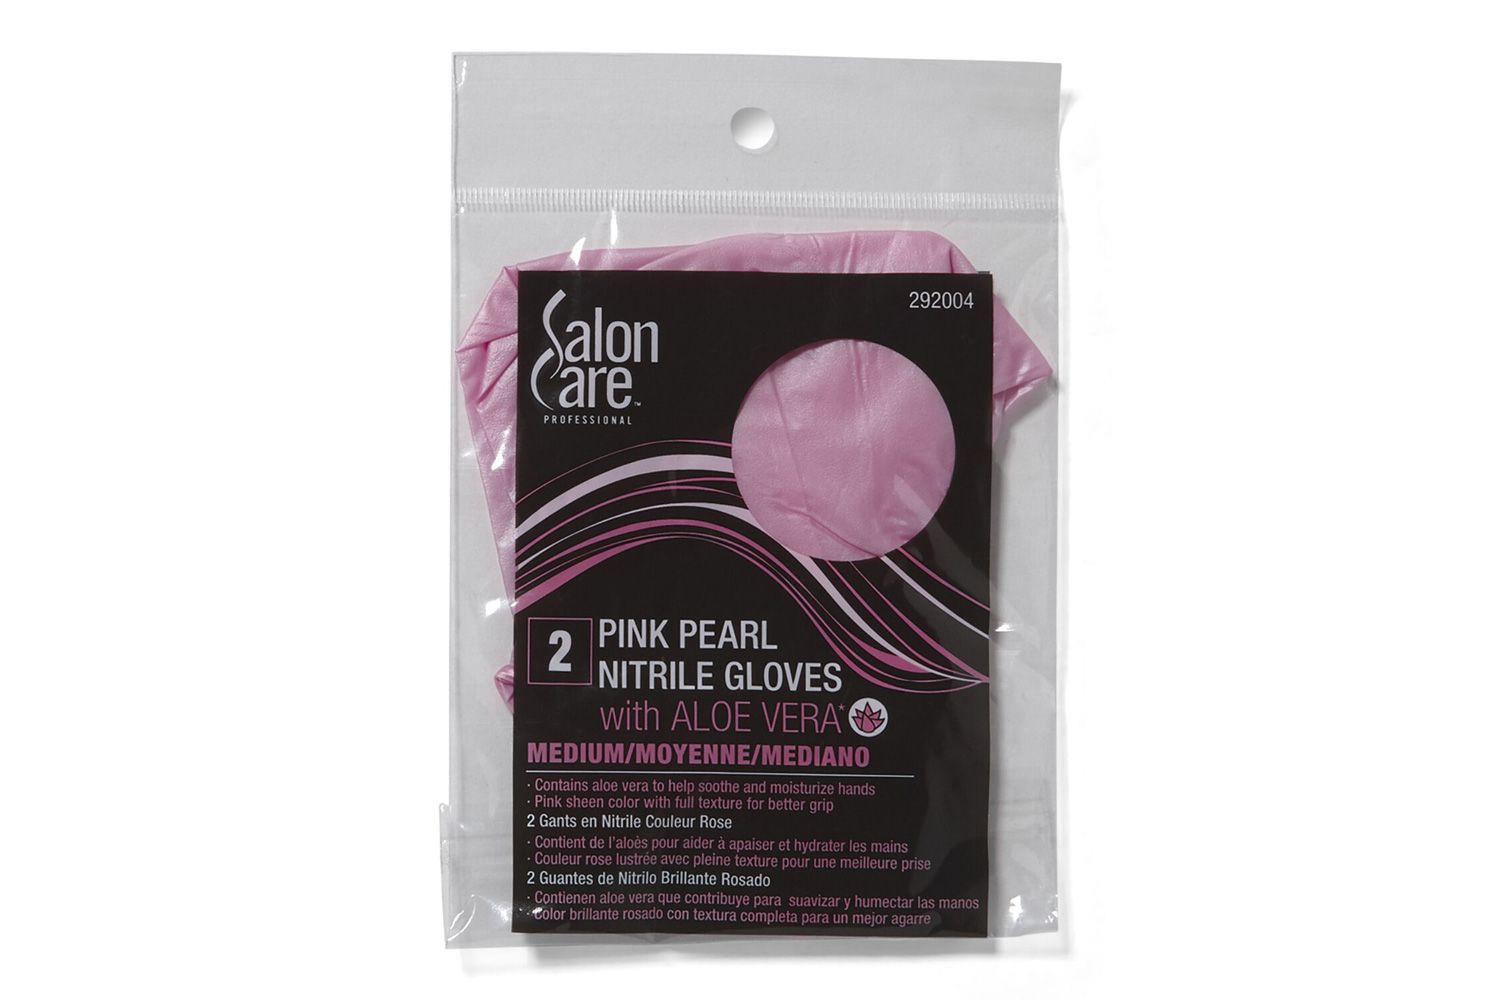 Salon Care Pink Pearl Nitrile Luvas com Aloe Vera